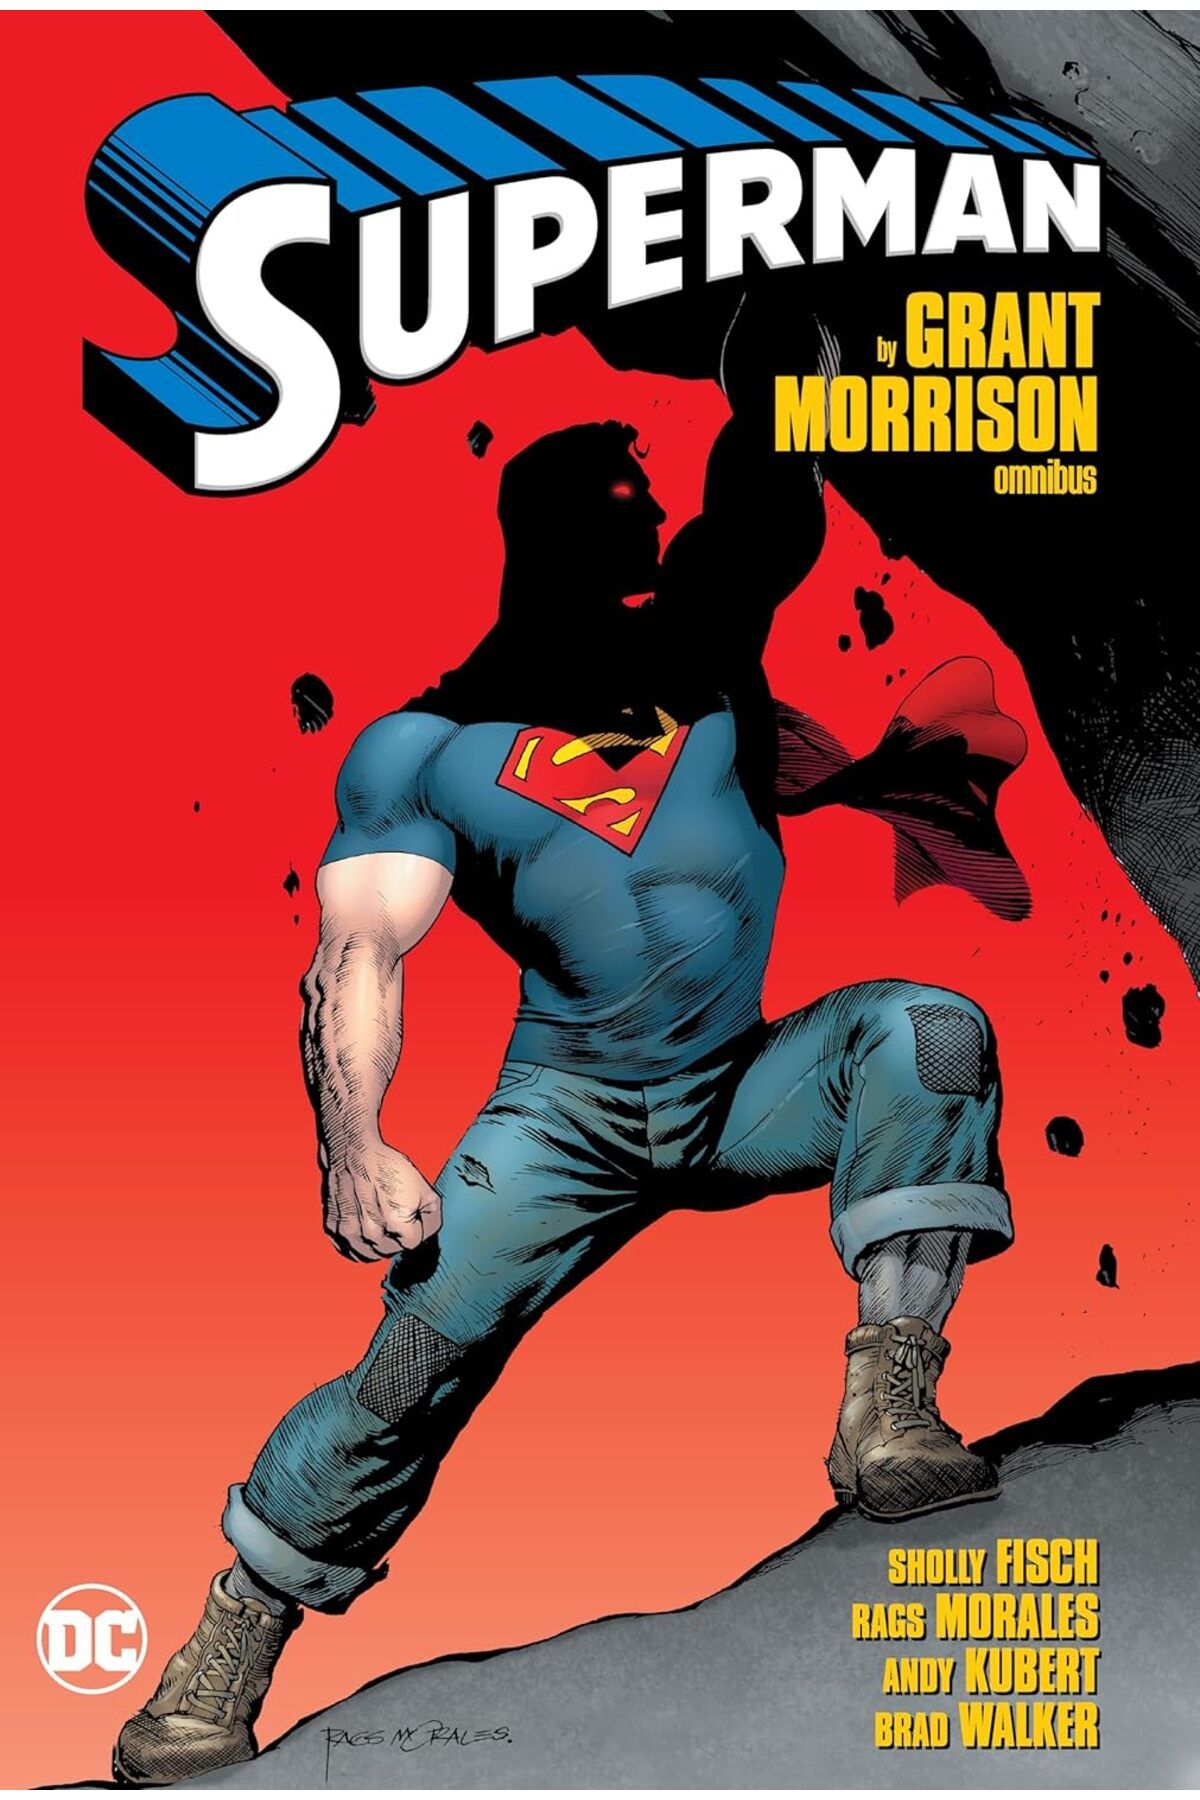 DC COMICS Superman by Grant Morrison Omnibus